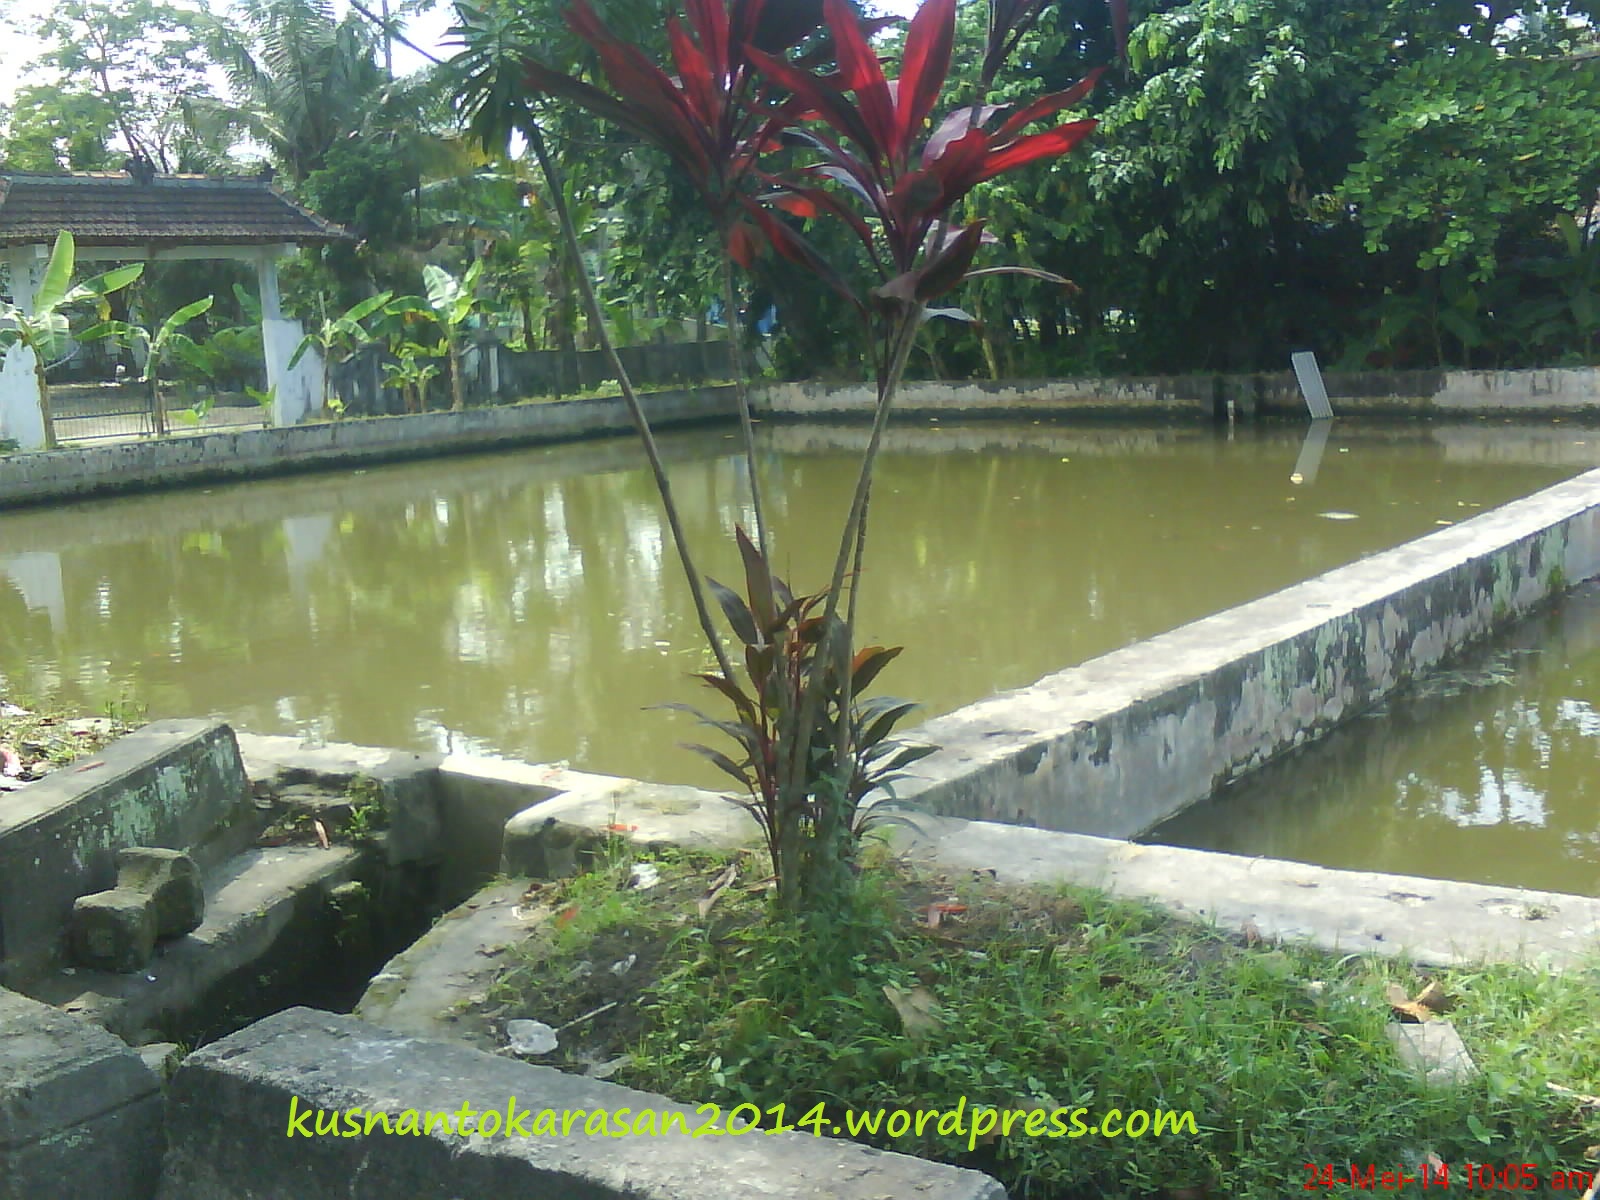 Kolam Ikan Dusun Karasan Kusnantokarasancom